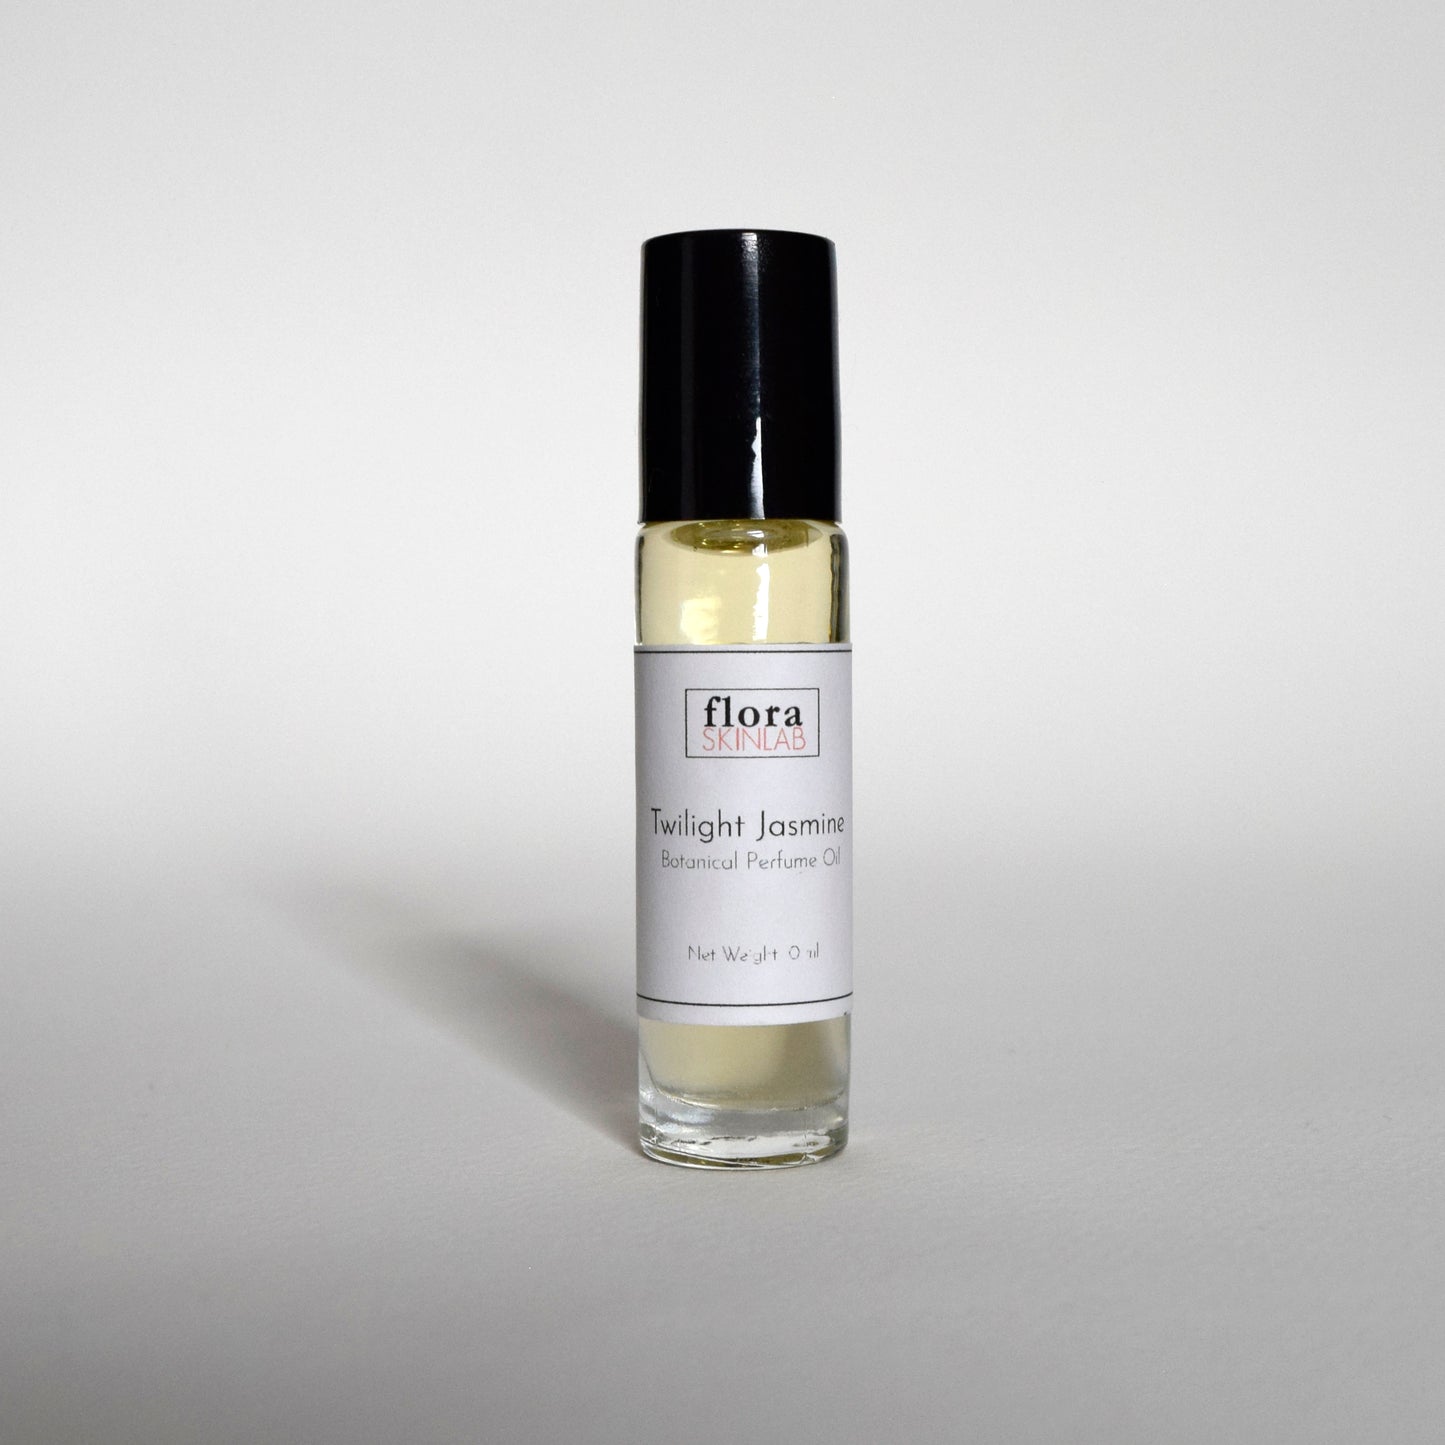 Natural Botanical Perfume for a Unique Signature Scent